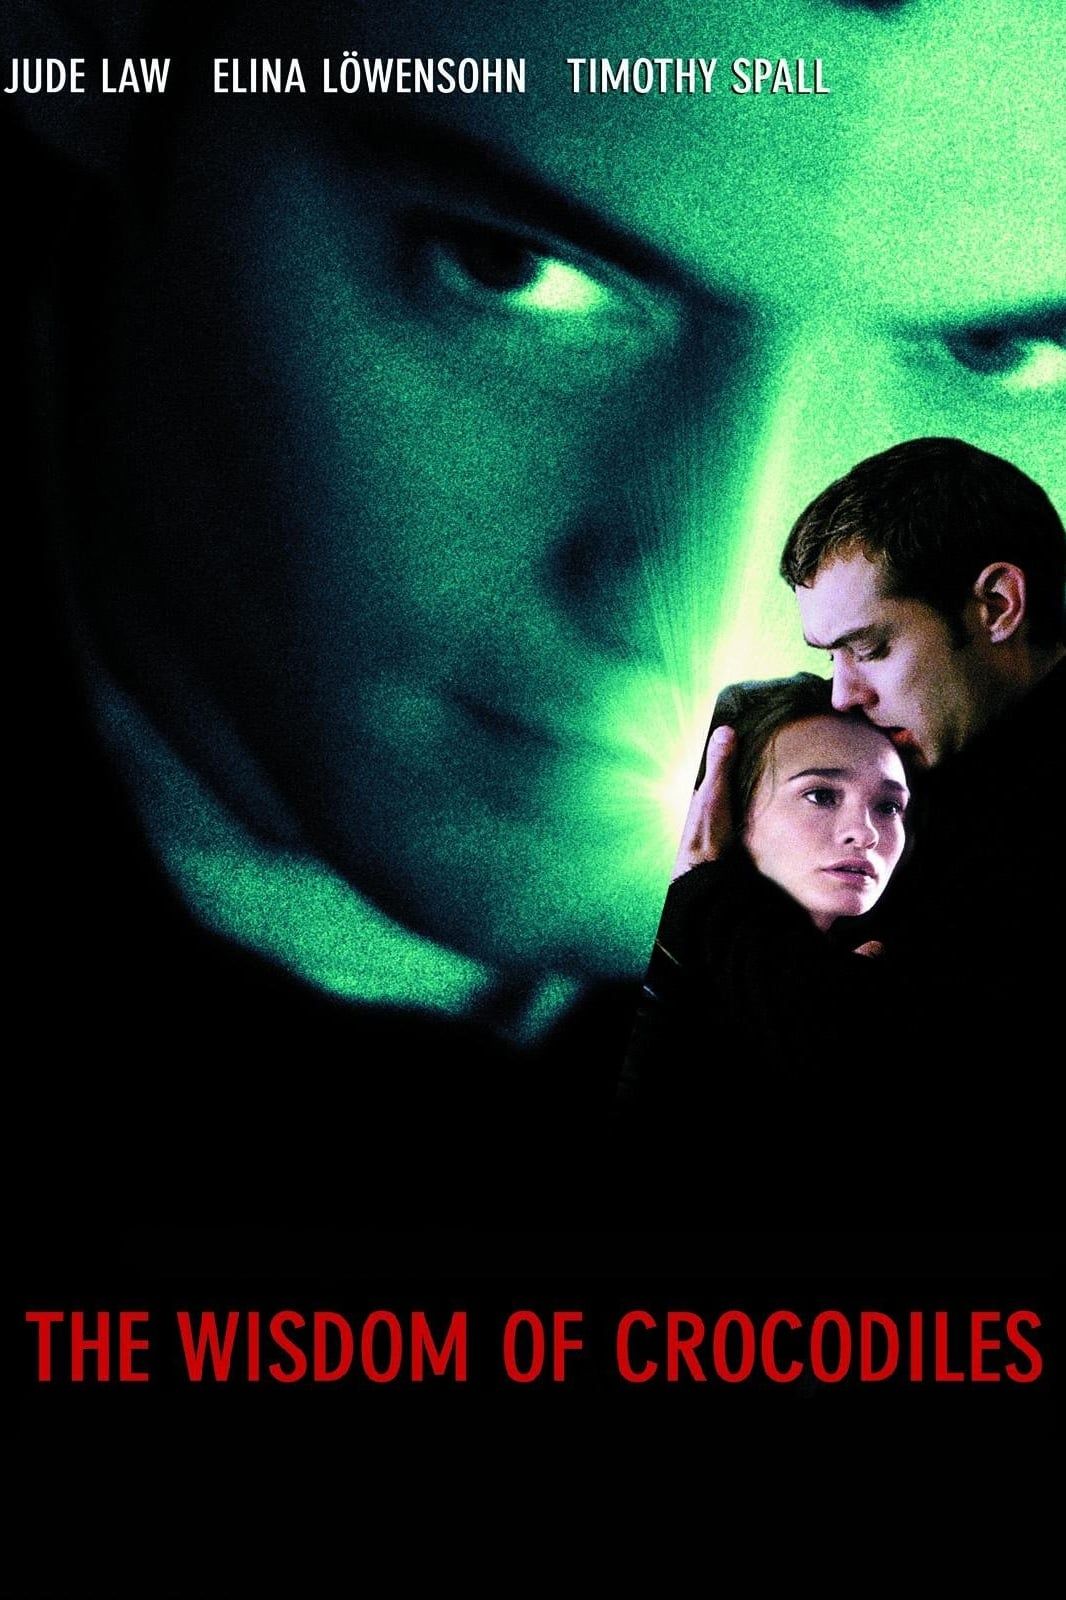 Soresport Movies: Intruders (2011) Horror Psychological